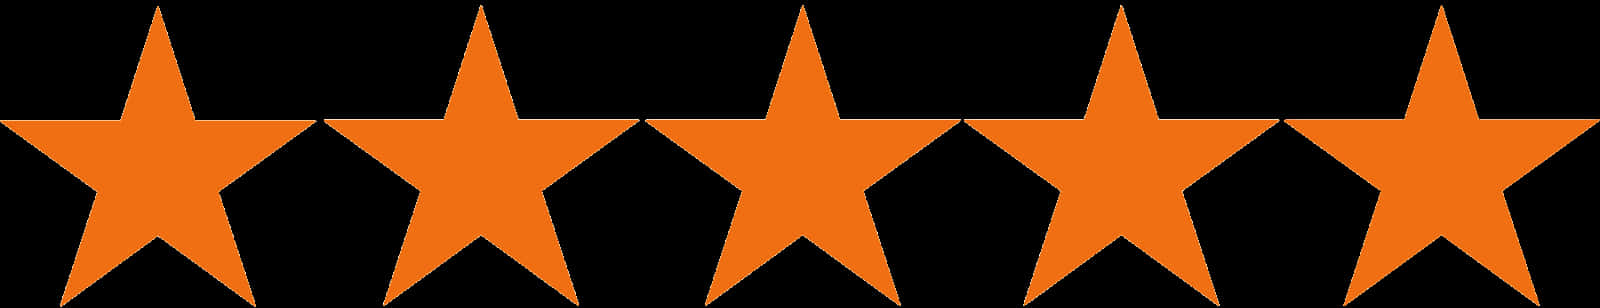 A Orange Star On A Black Background